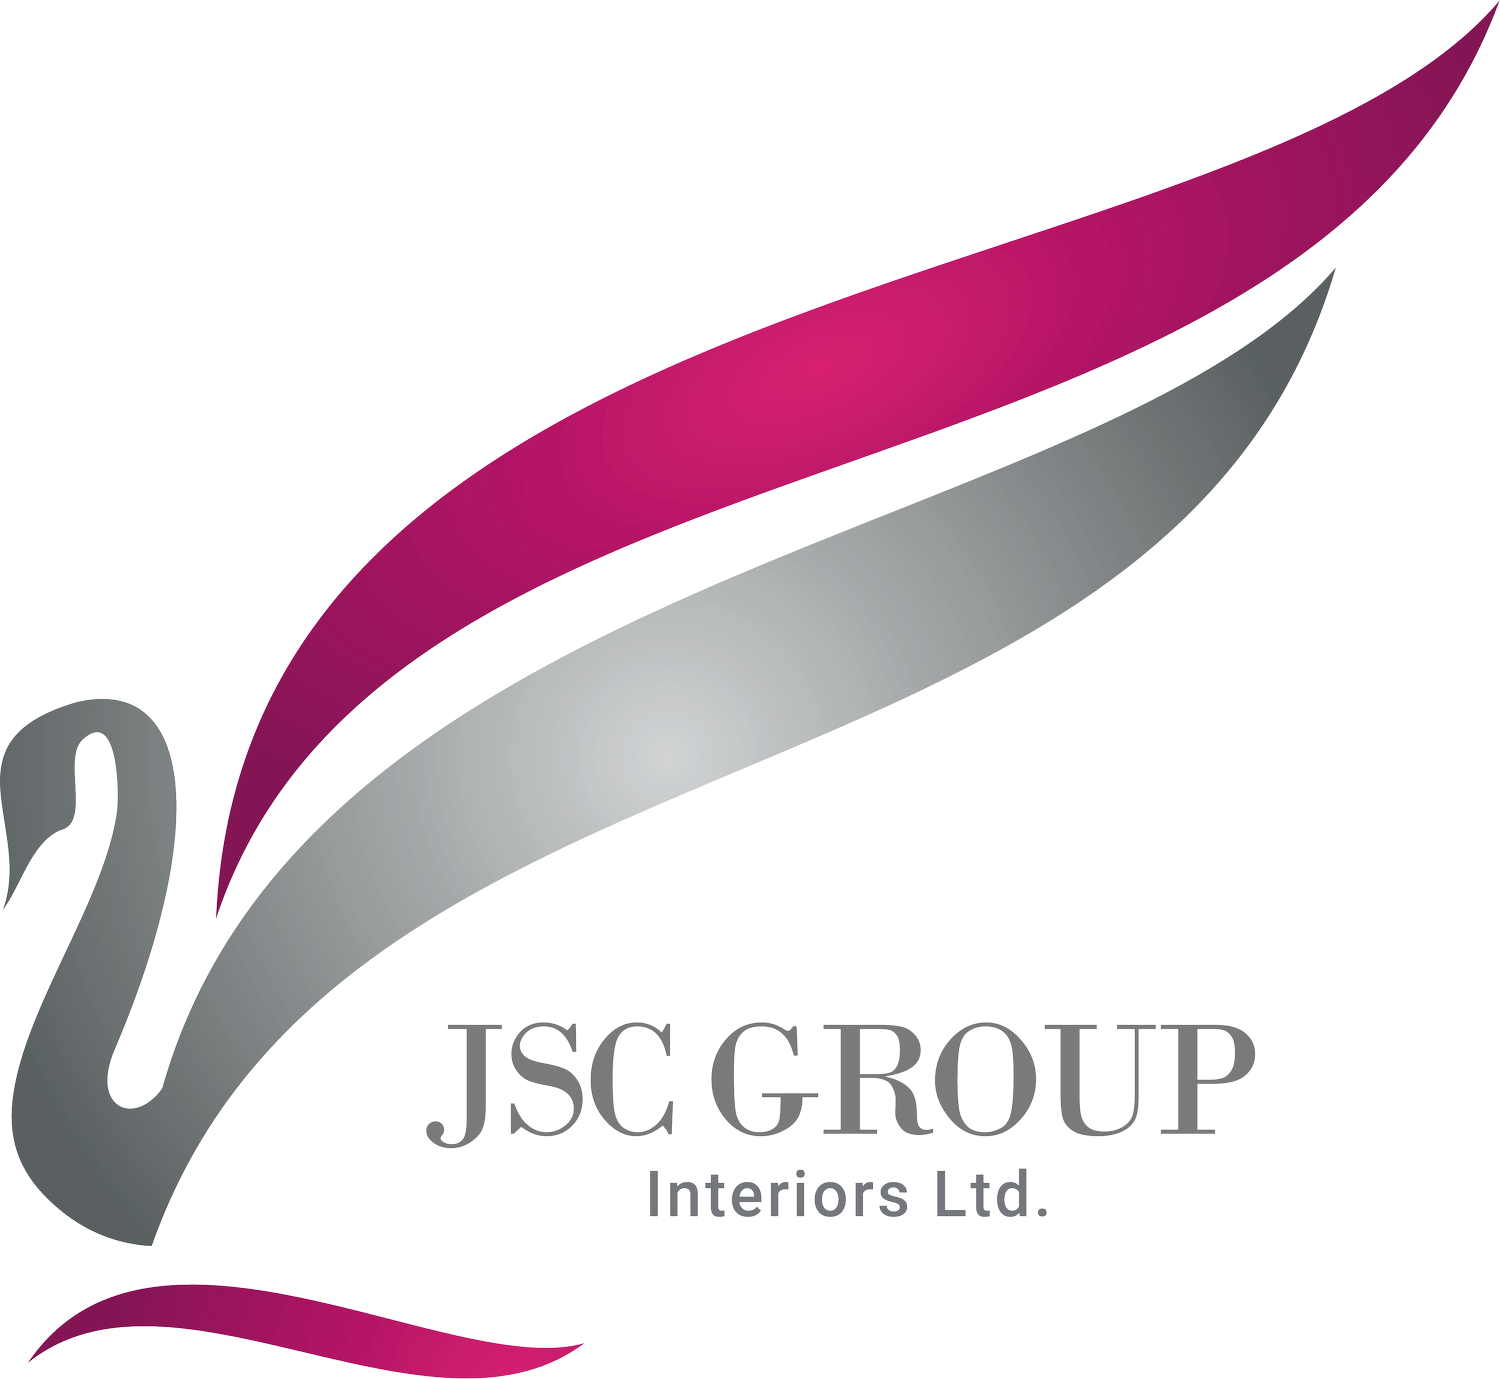 JSC Group Interiors Ltd.